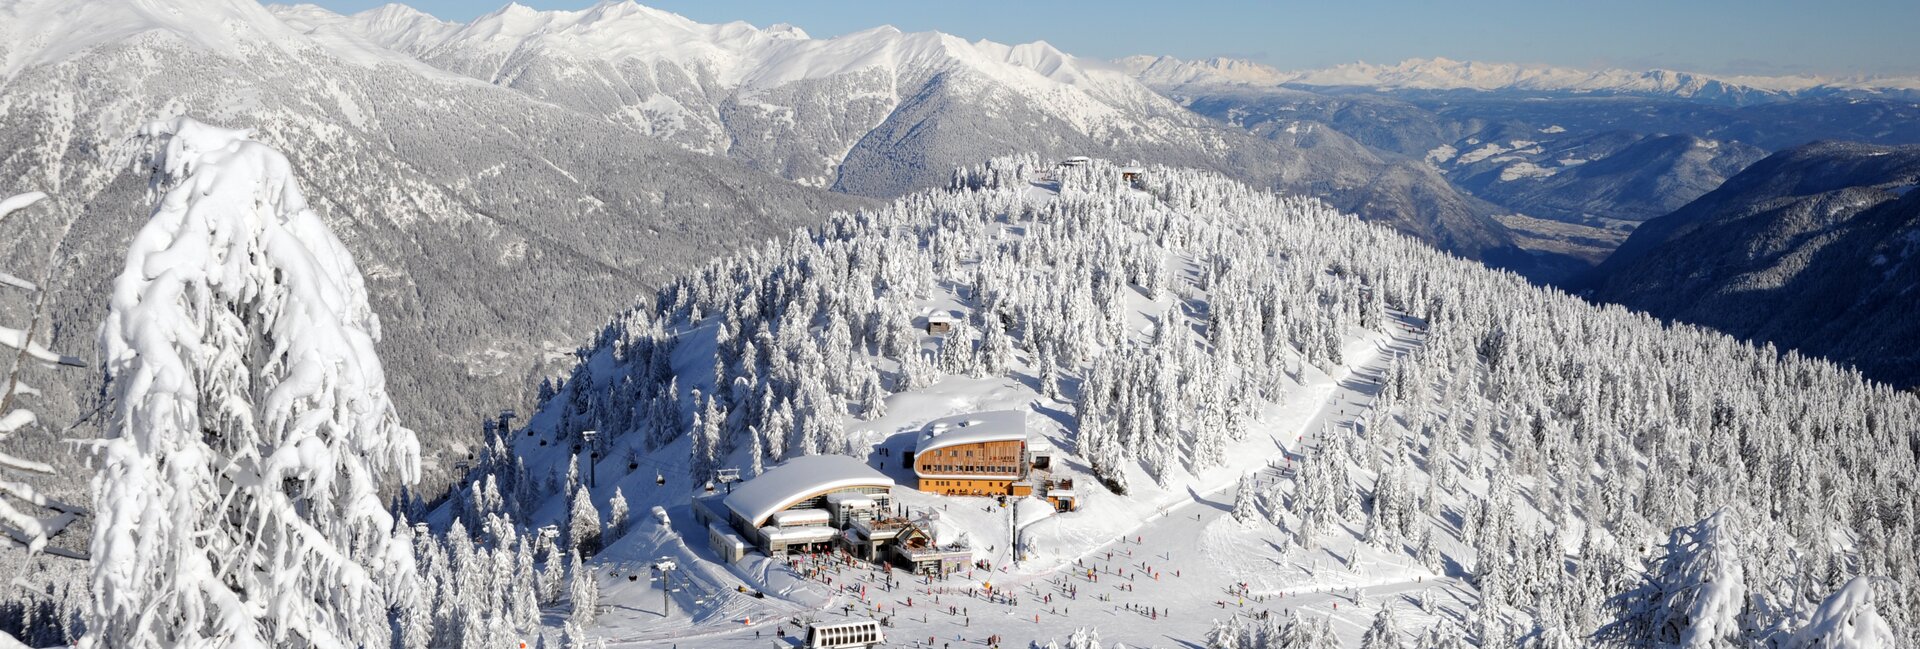 Folgarida-Marilleva  (Skiarea Campiglio Dolomiti di Brenta - Val di Sole Val Rendena)